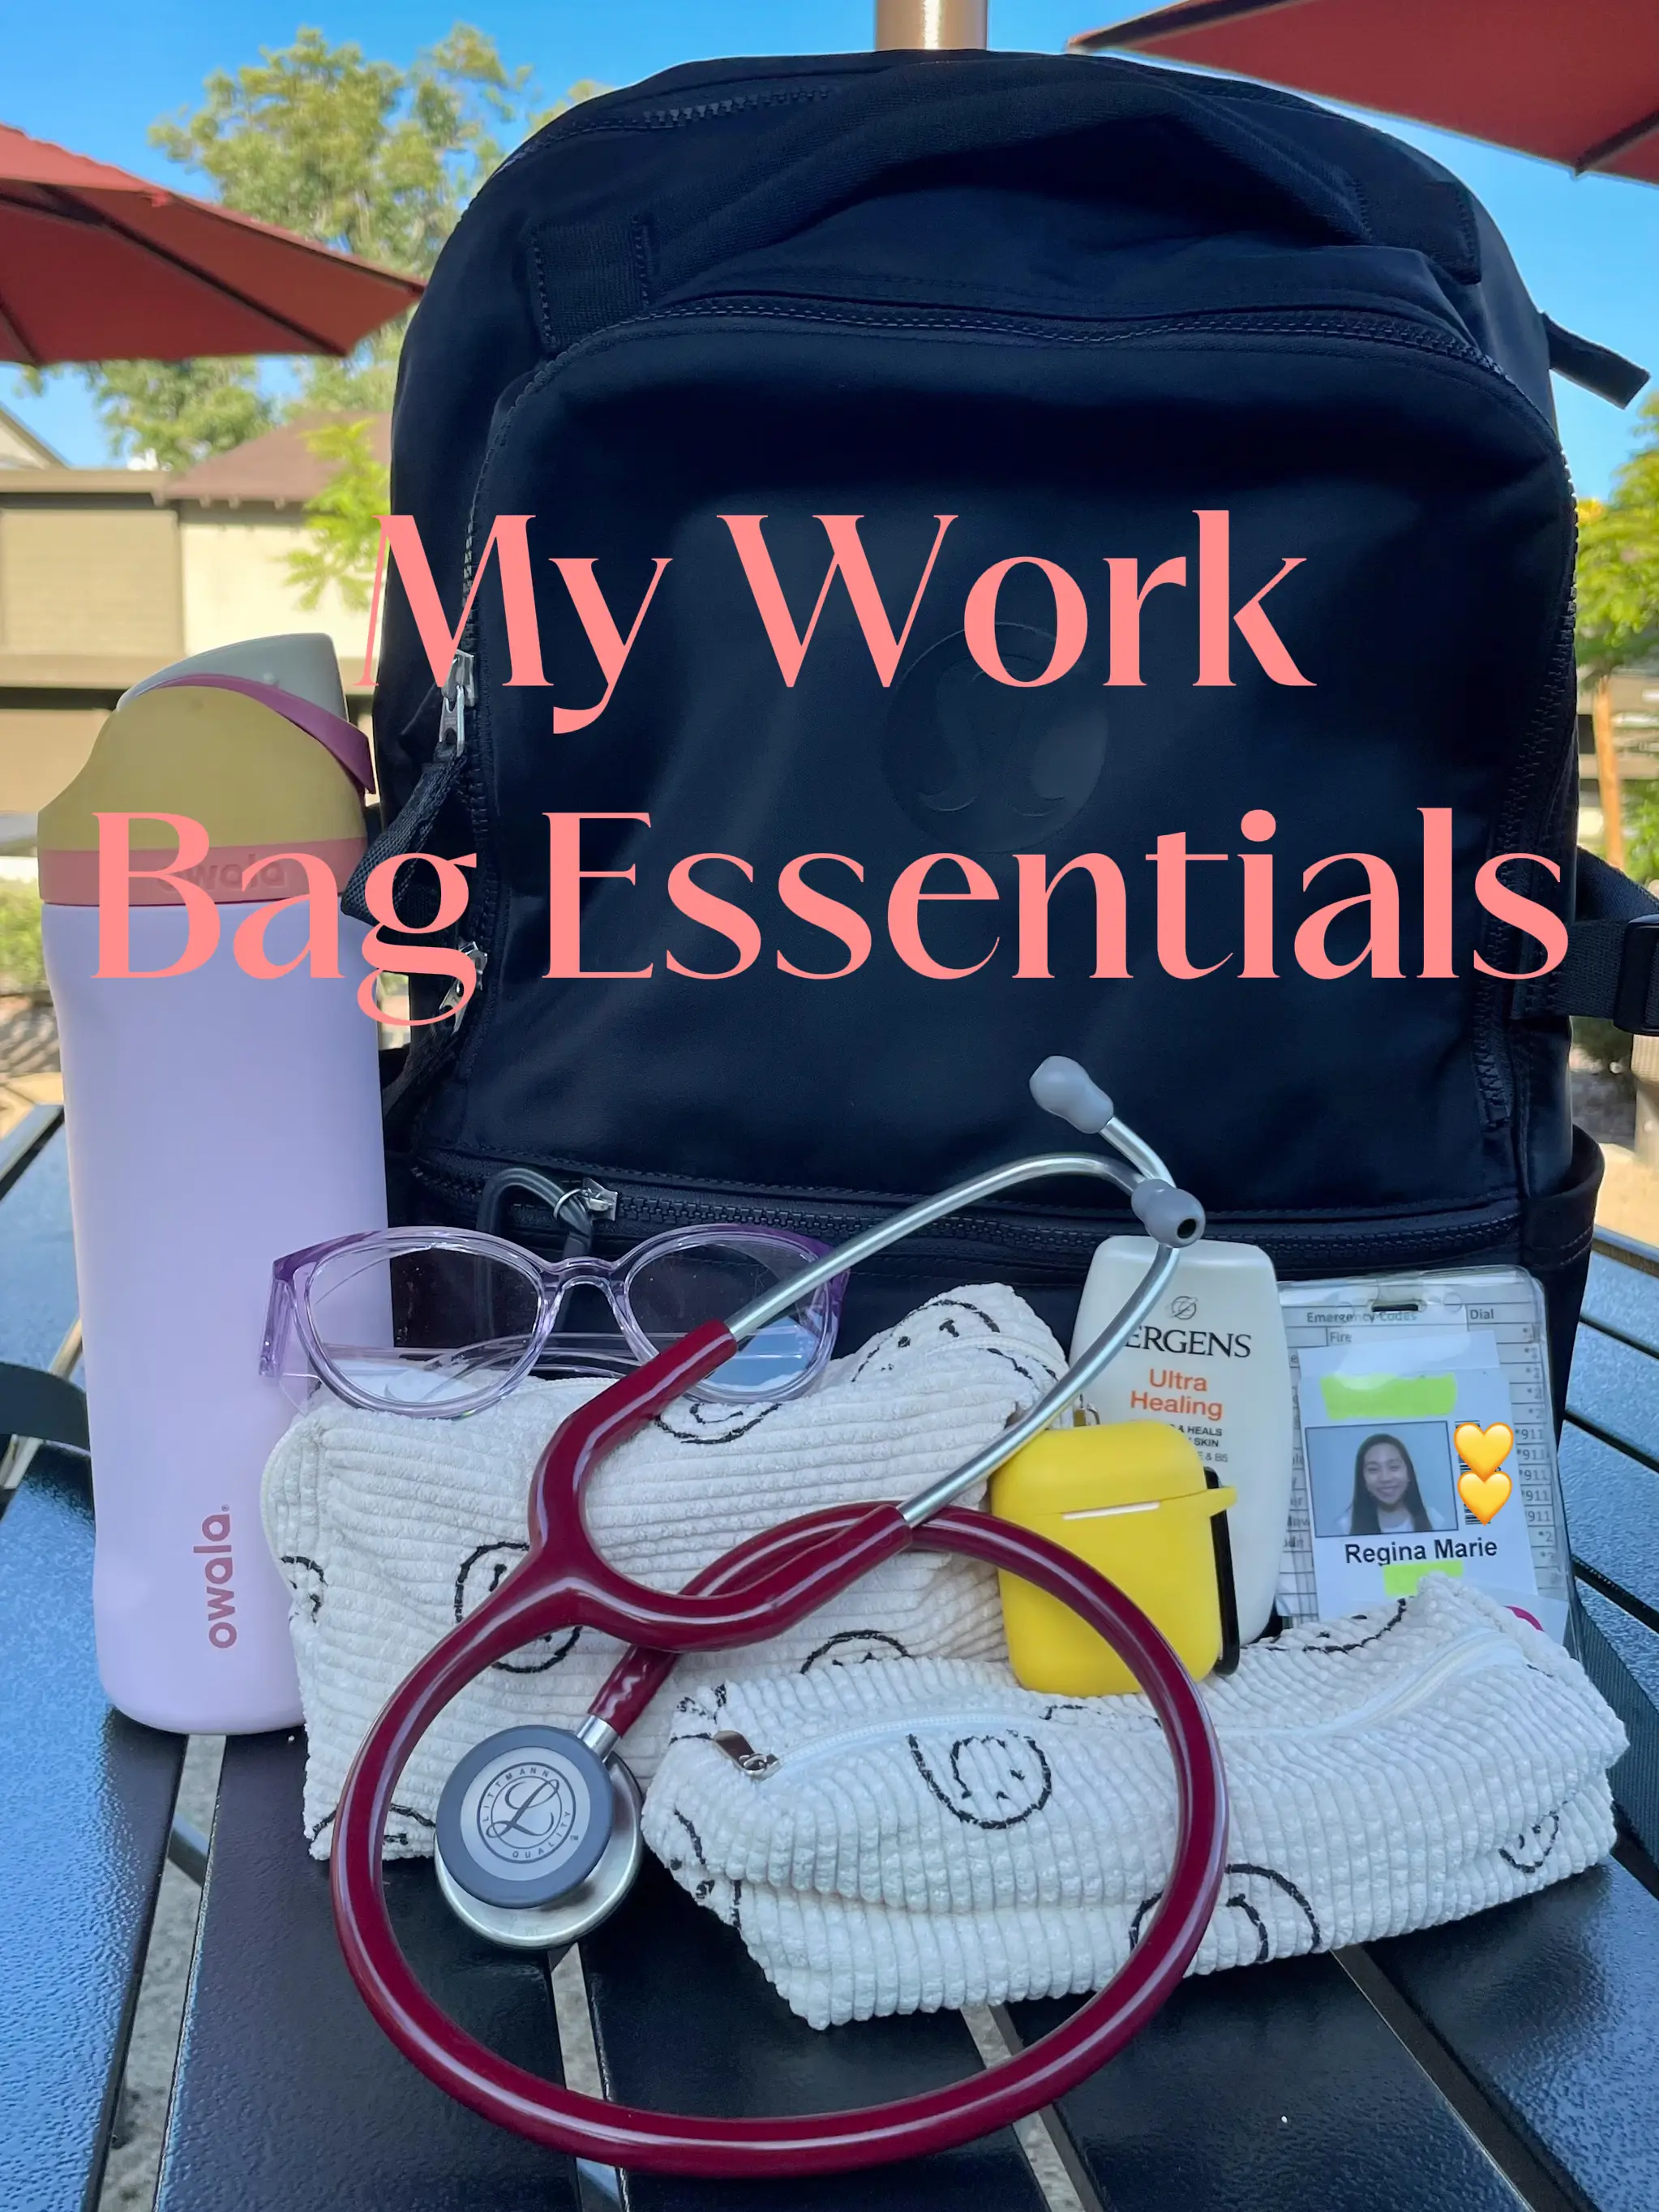 Nursing Essentials for Work - Lemon8 Search